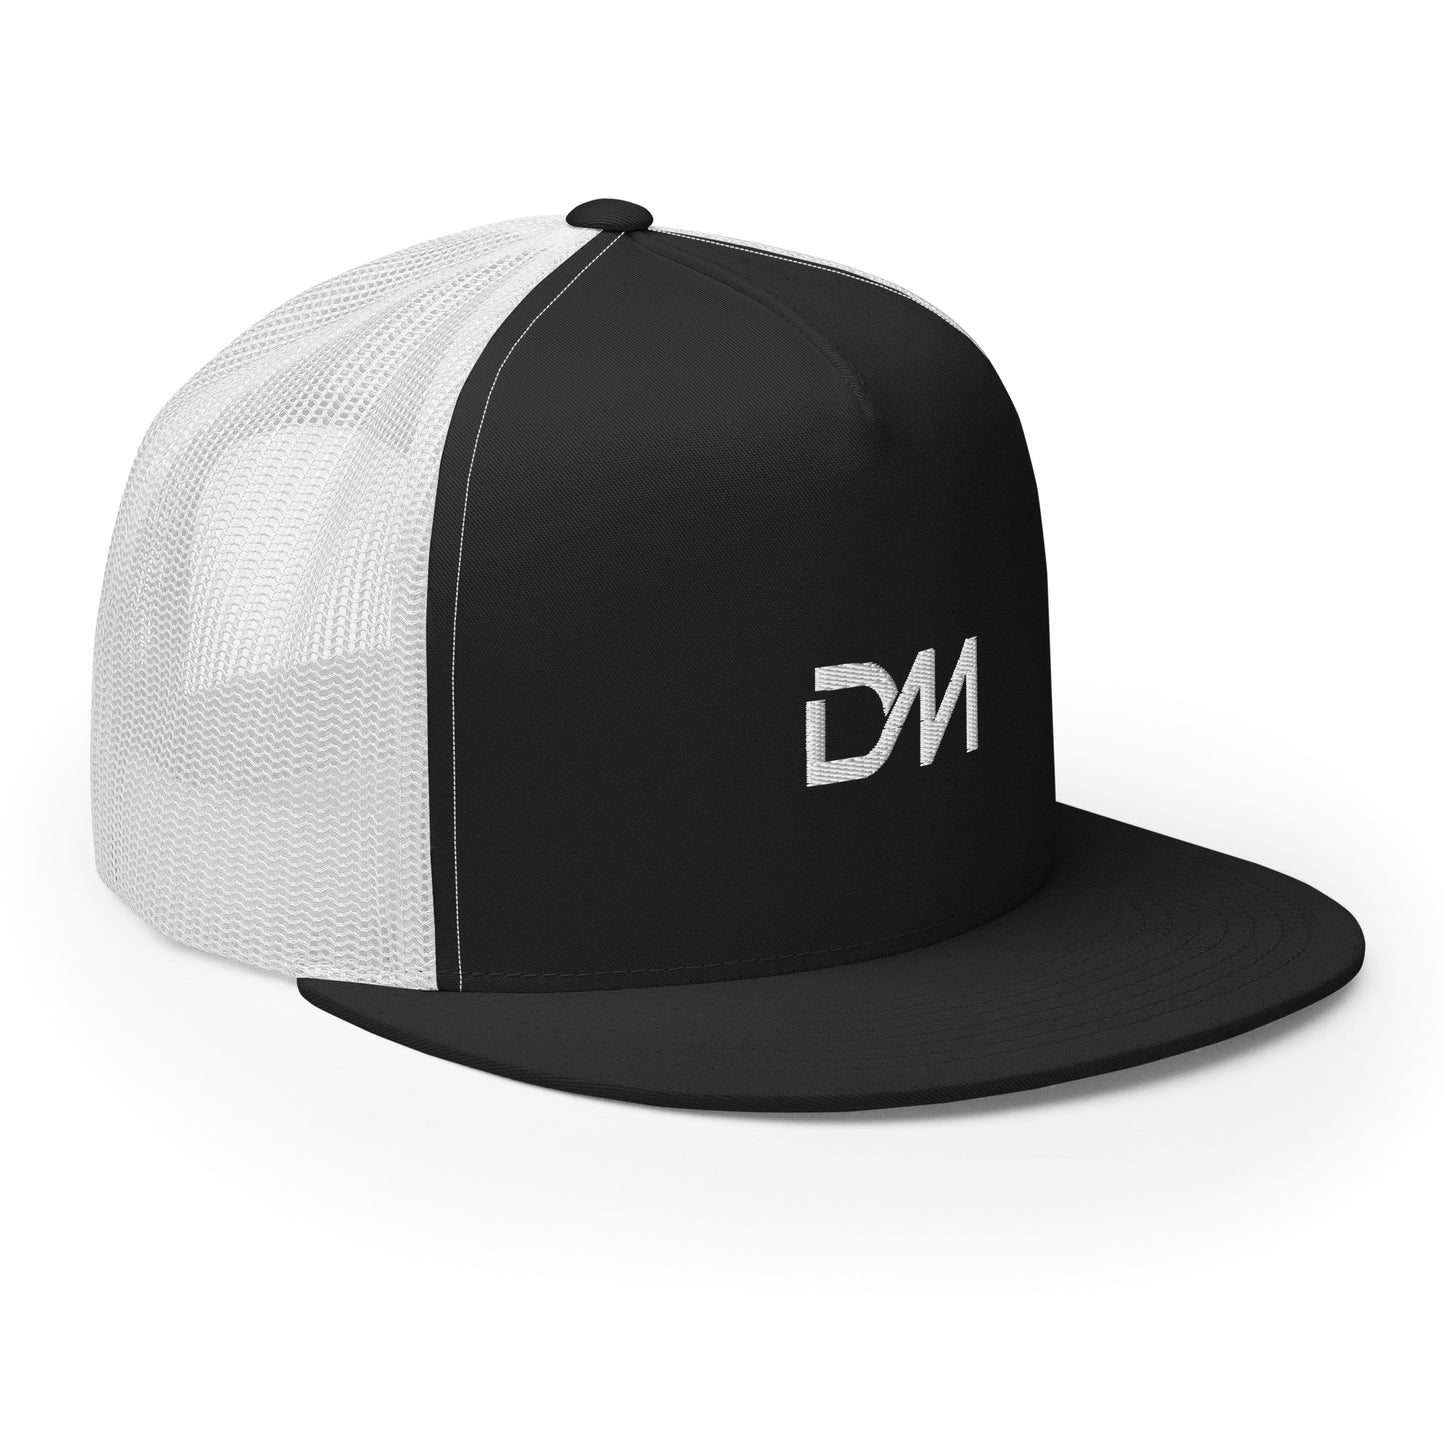 DJ Moyer "DM" Trucker Cap